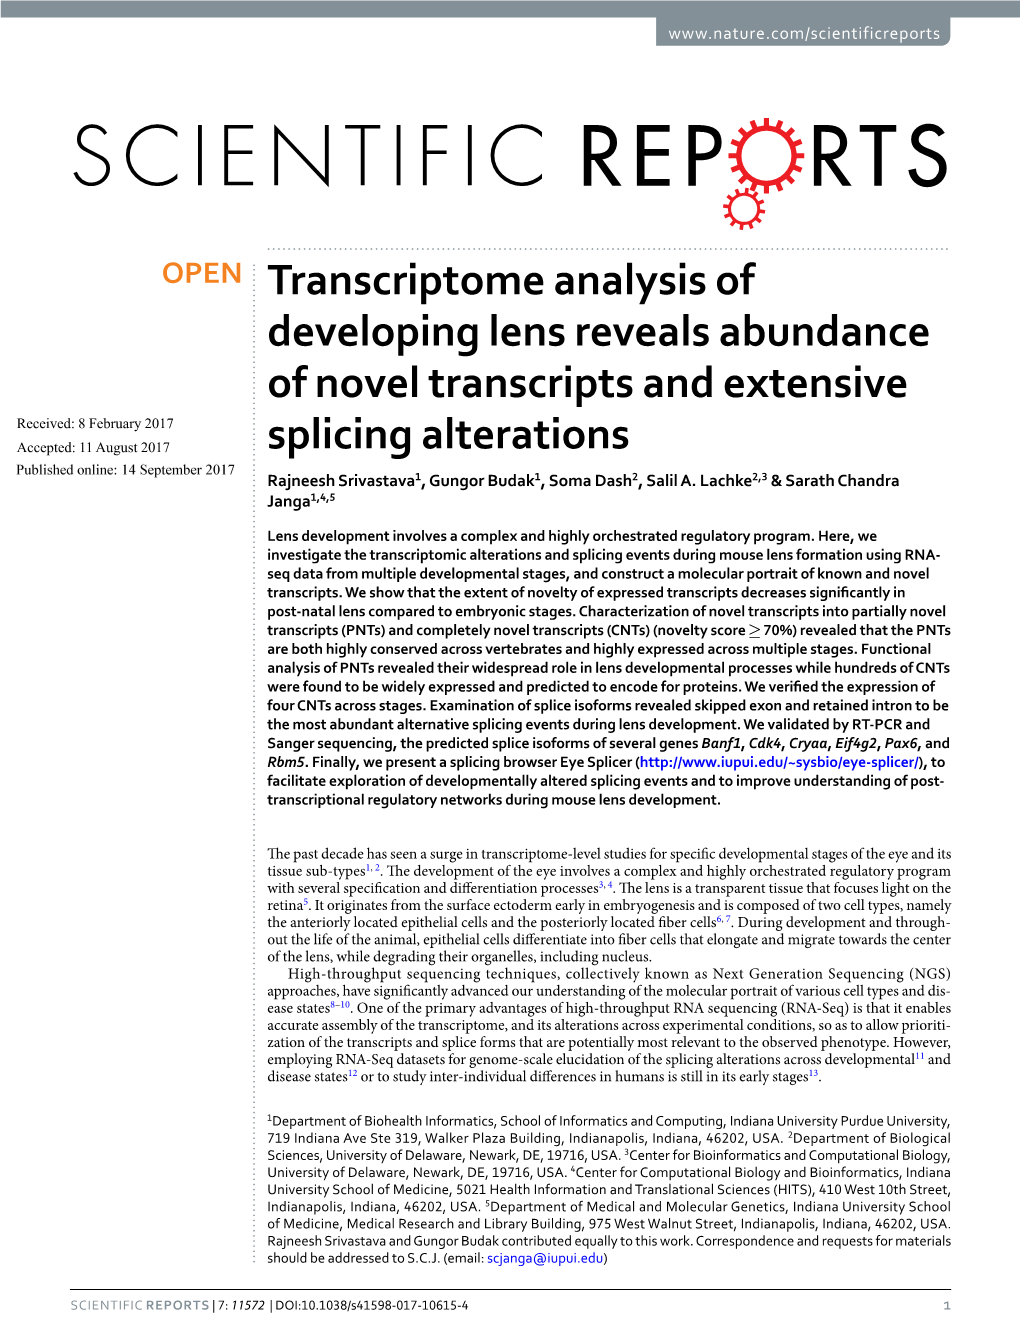 Transcriptome Analysis of Developing Lens Reveals Abundance of Novel